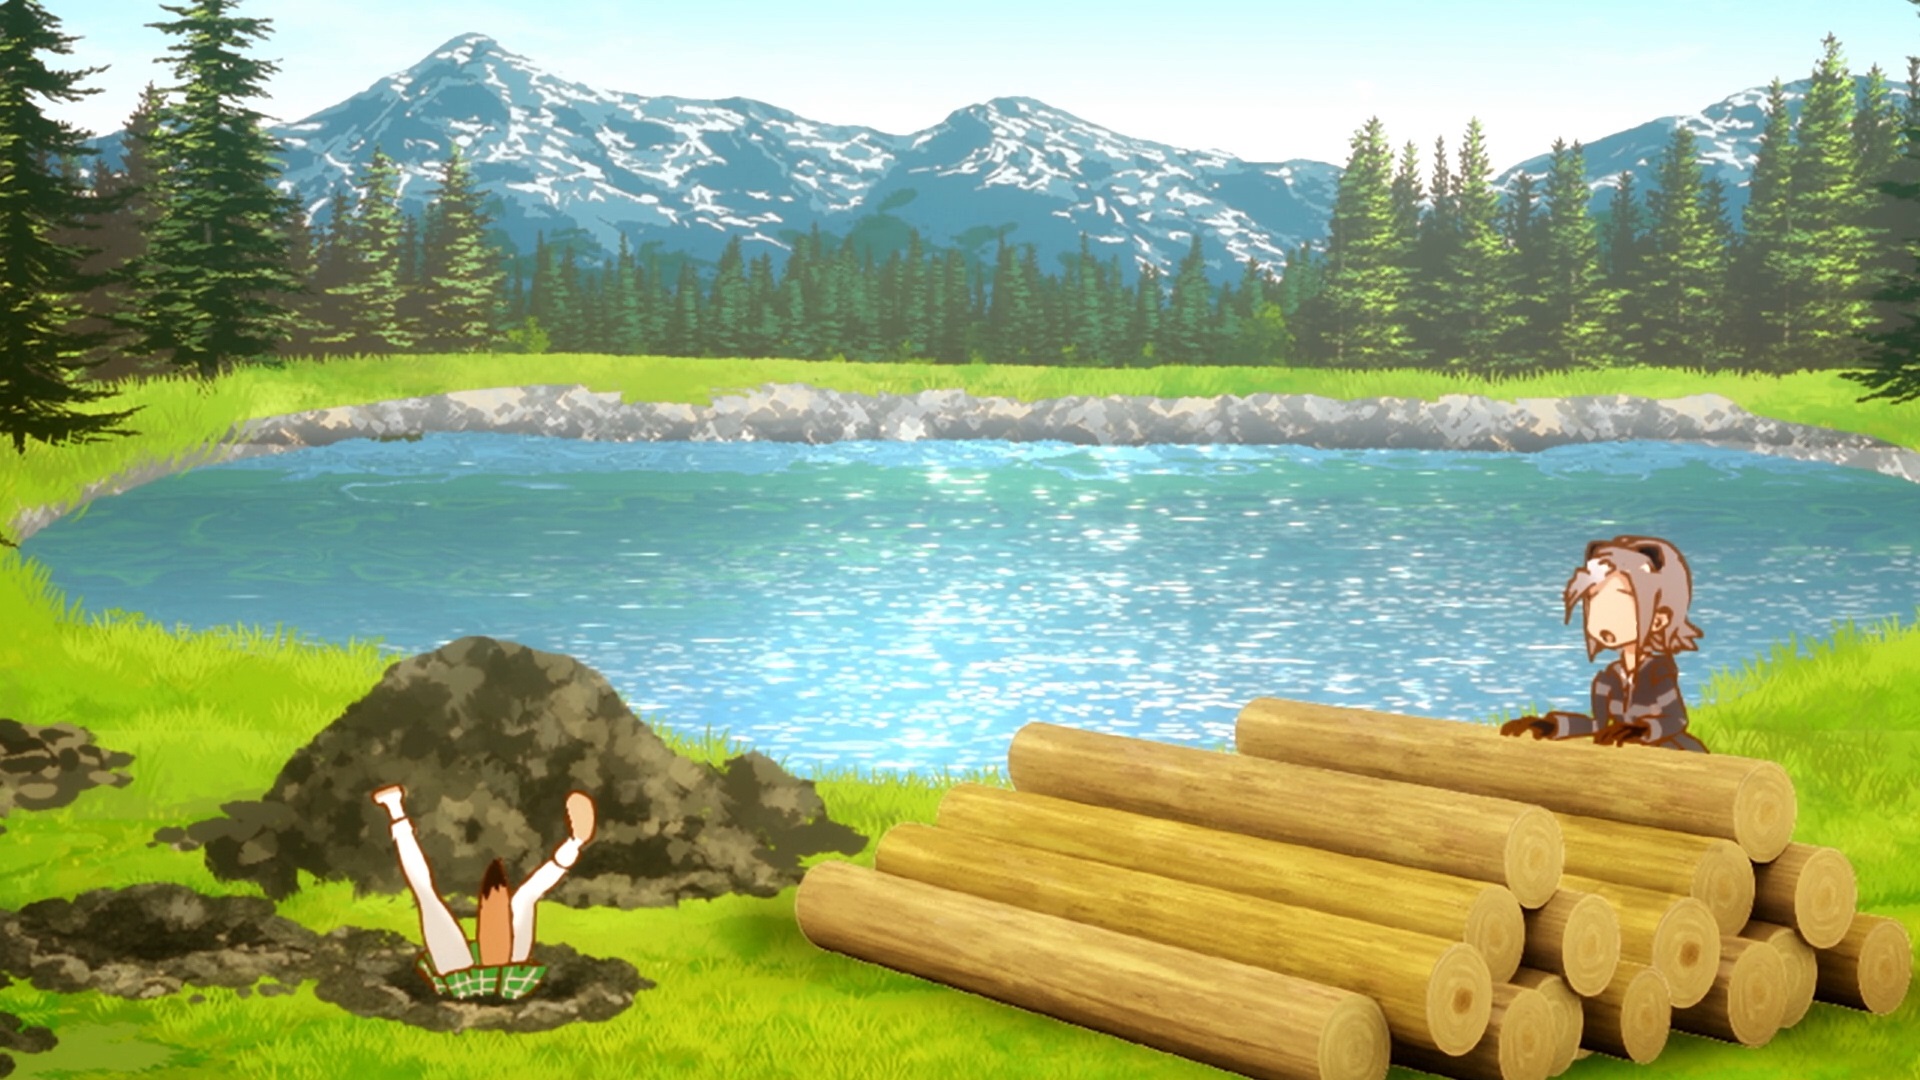 A Snowy Mountain Area in OP from Anime Season 1.